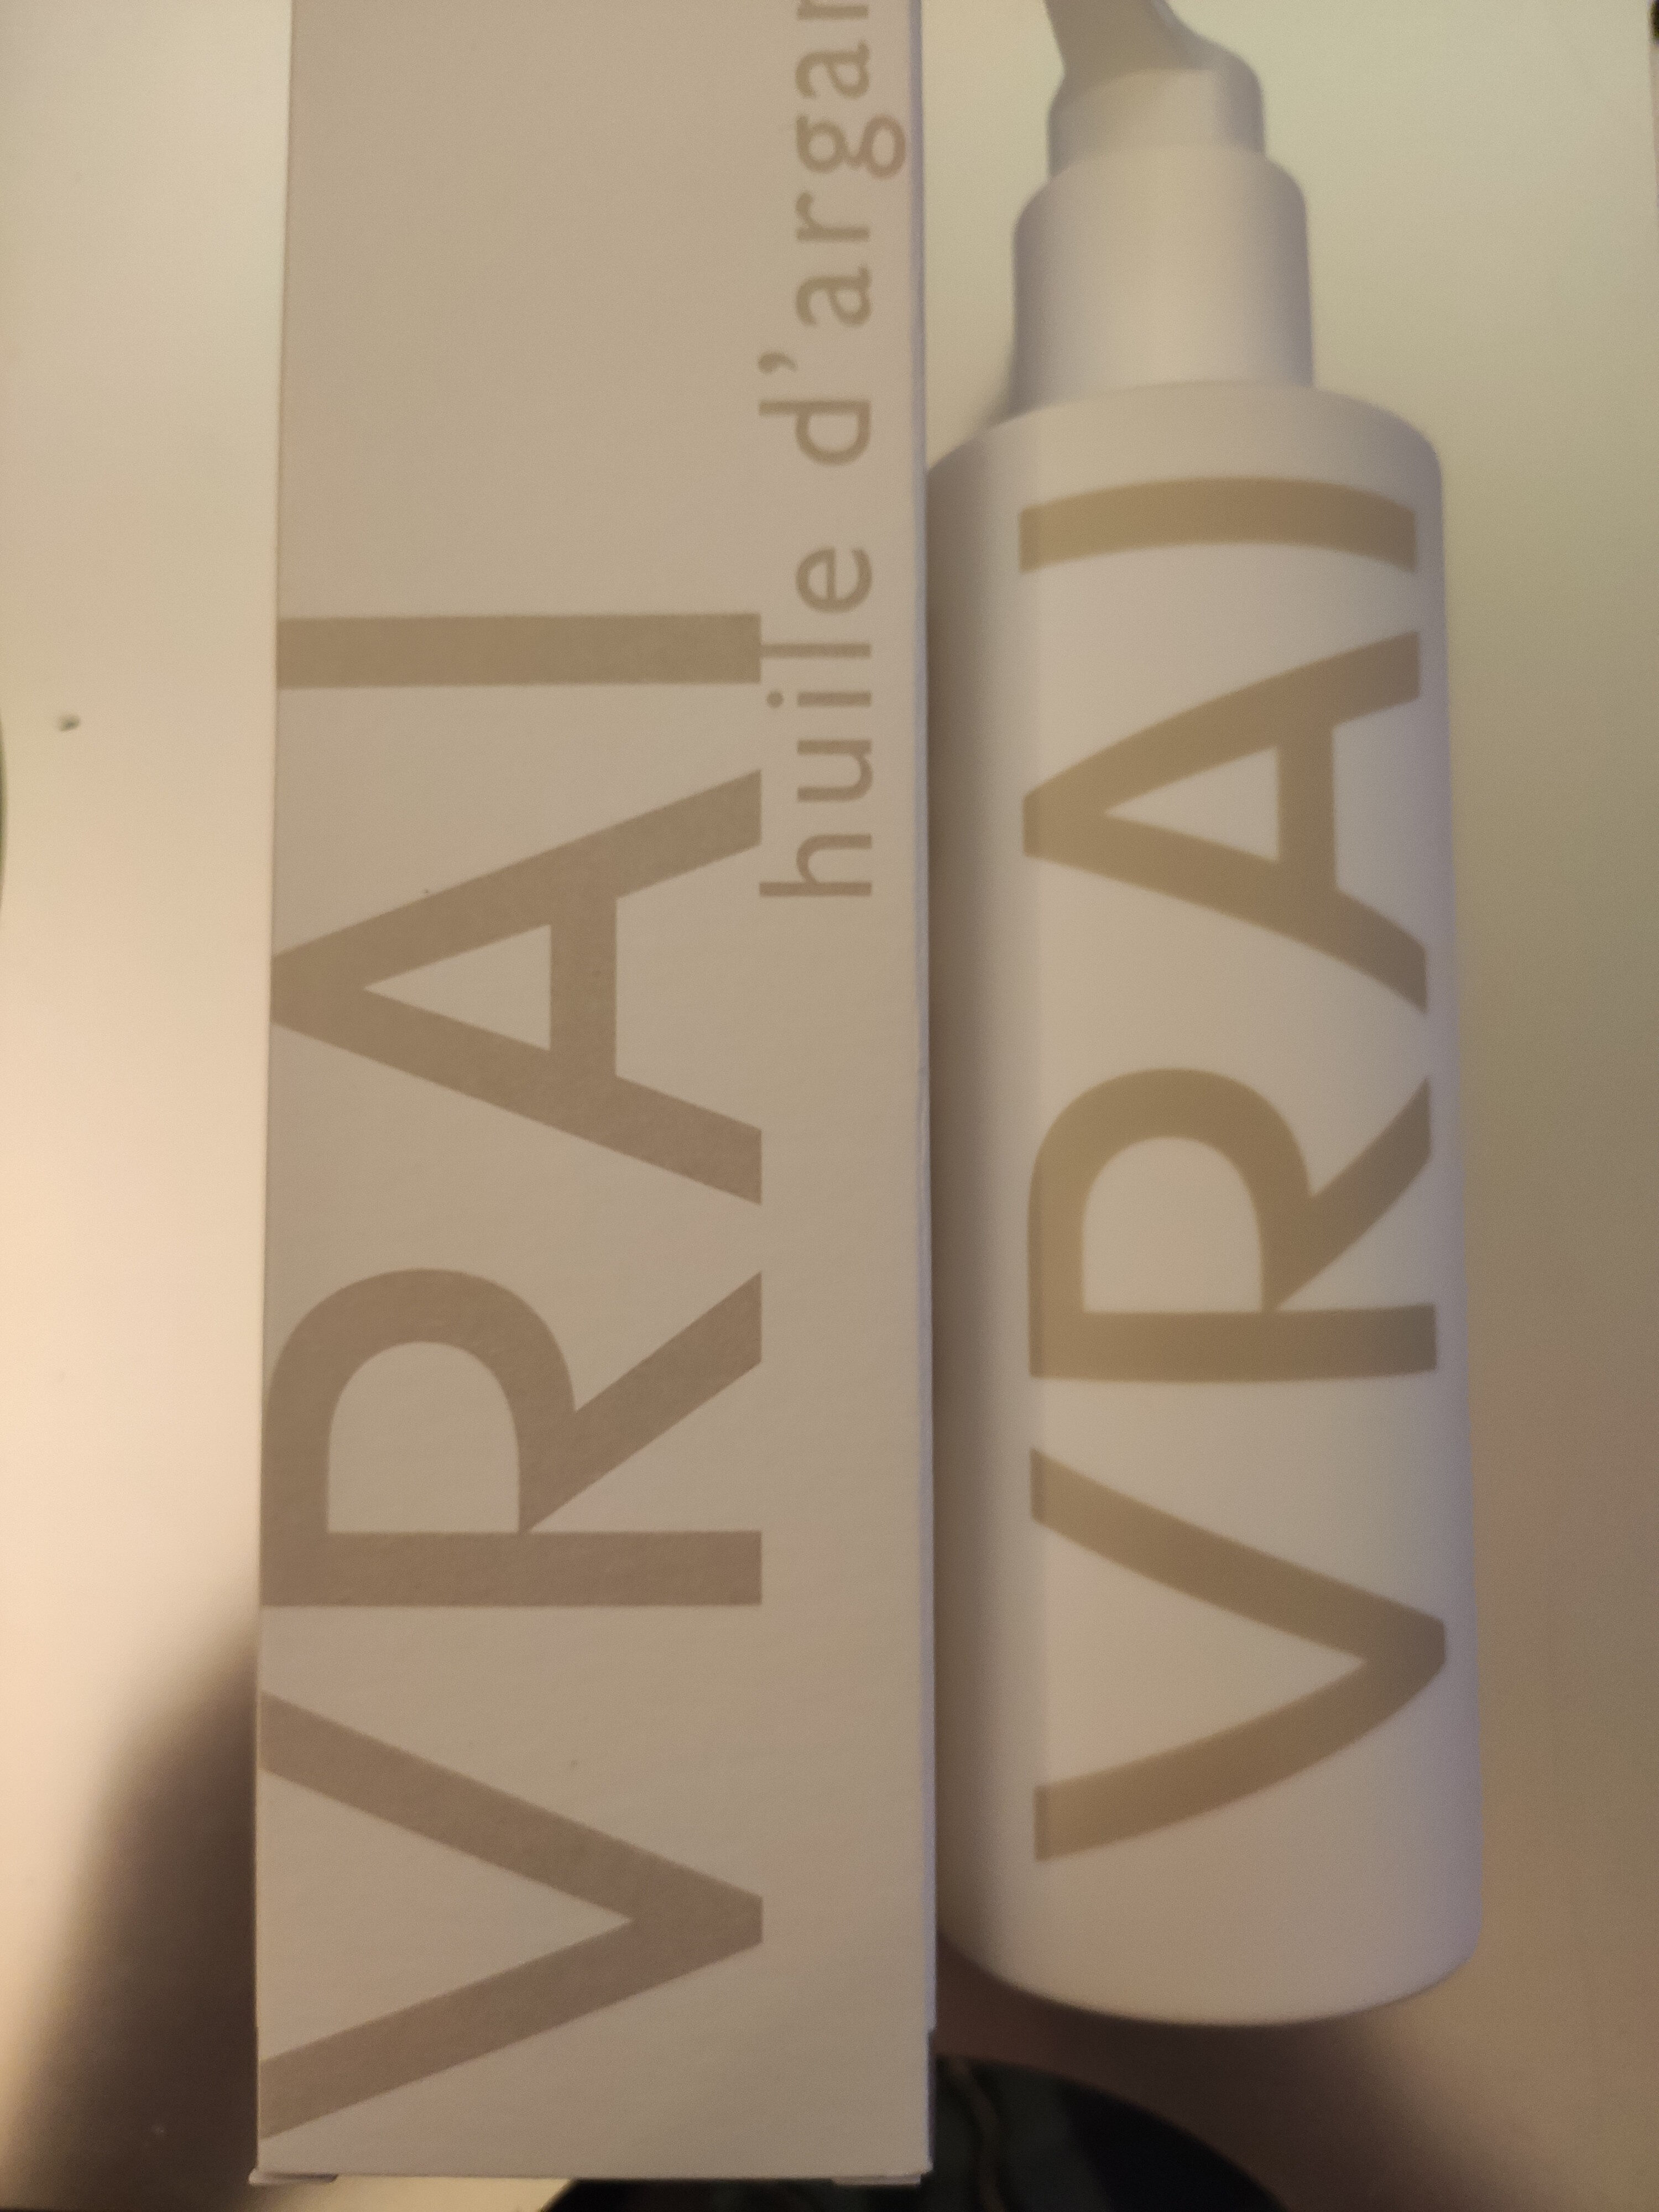 VRAI huile d'argan - Product - en